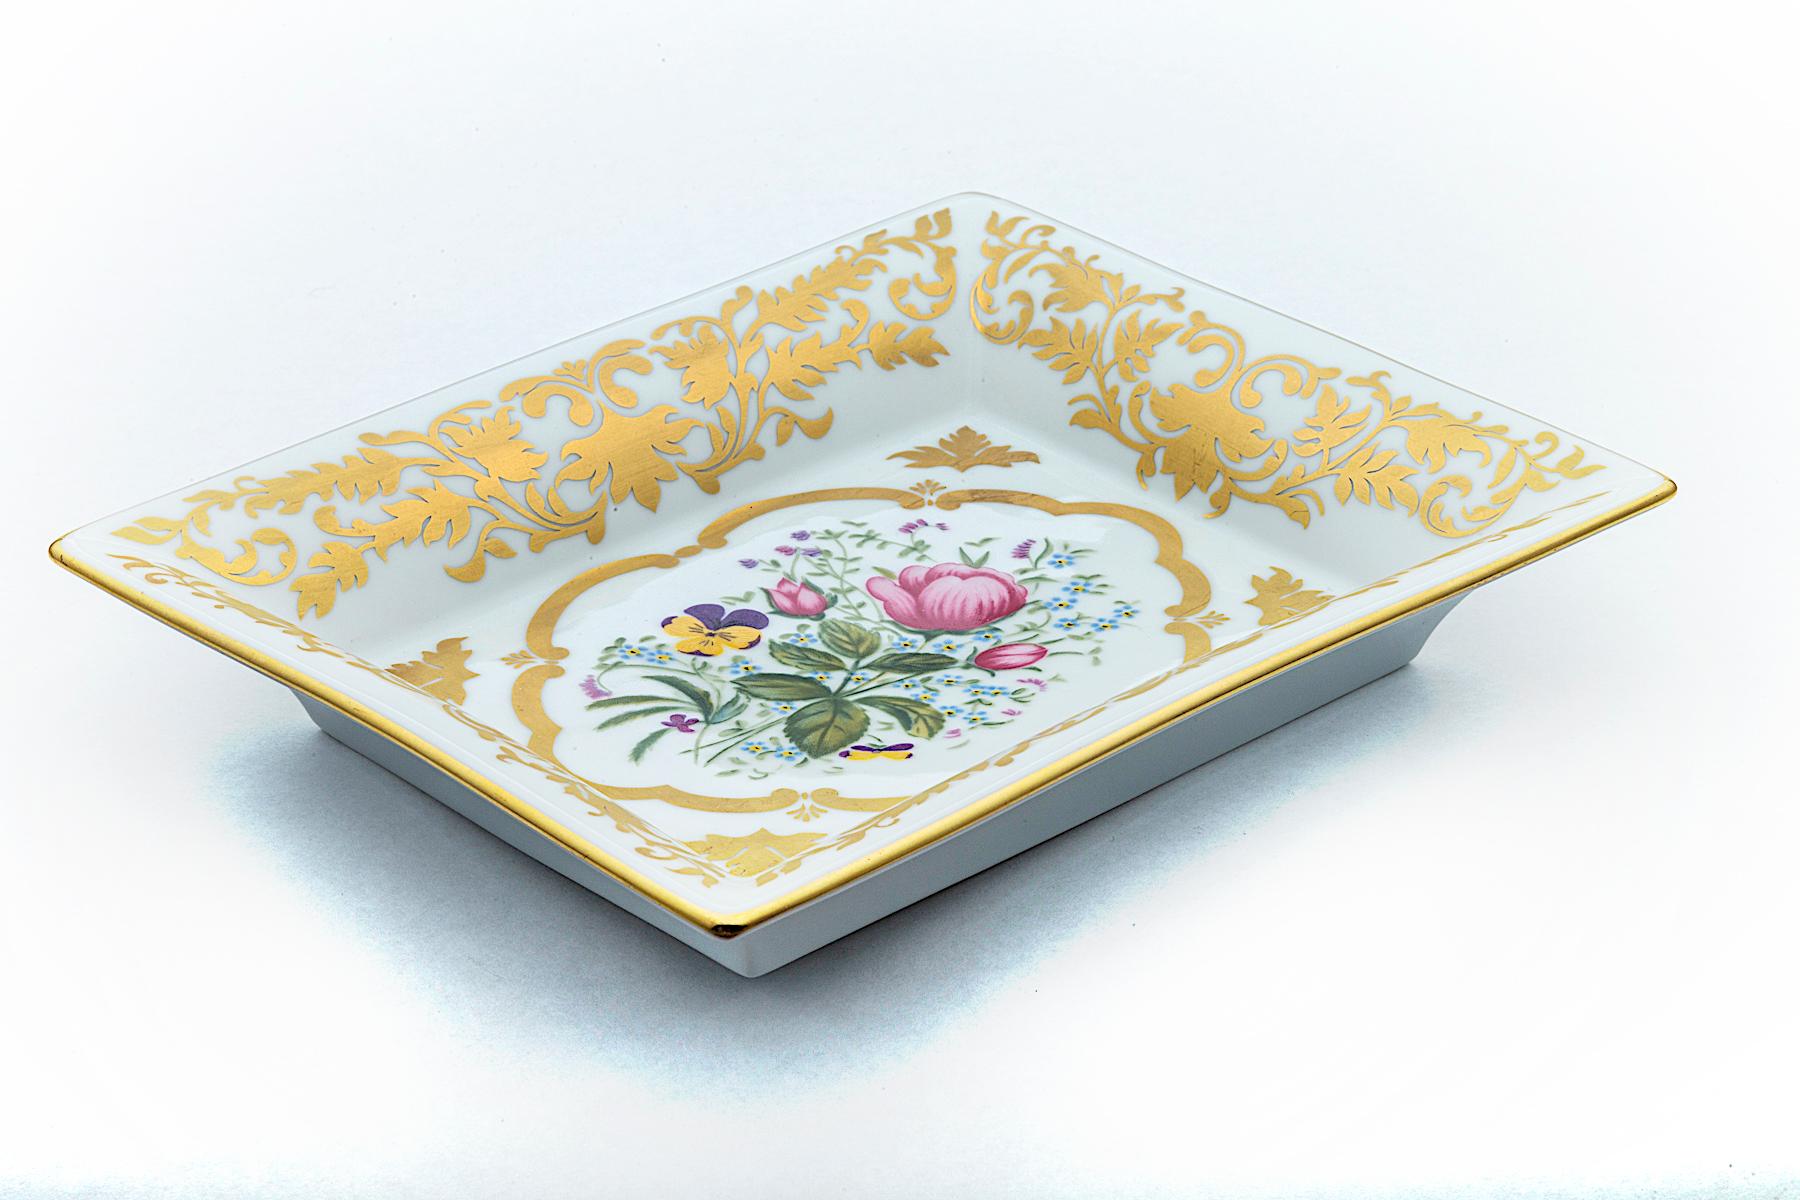 Contemporary Patek Philippe Commemorative Limited Edition Limoge Porcelain Trays